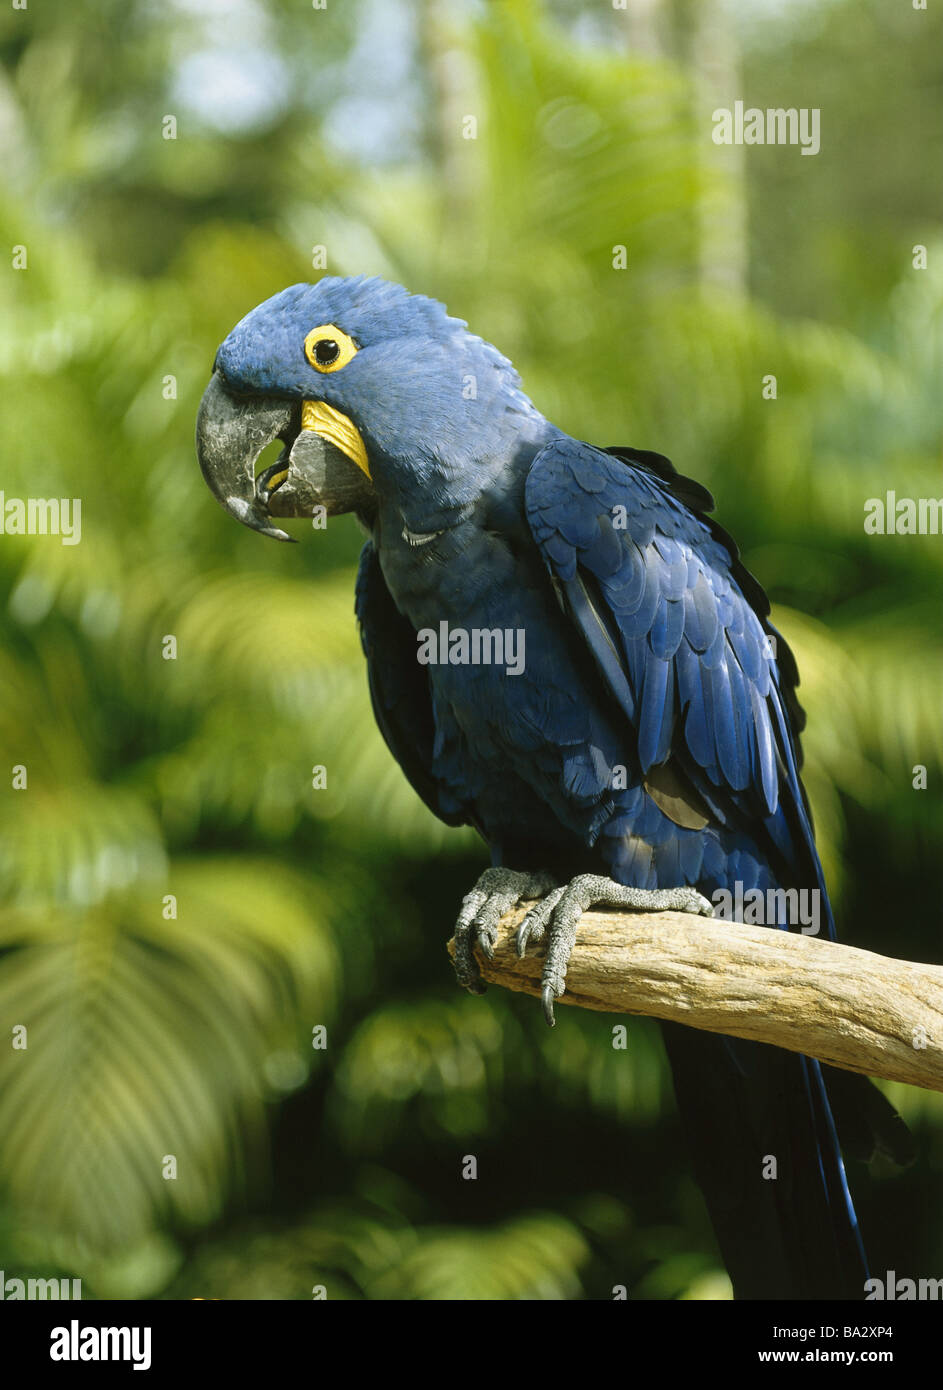 Filiale Hyazinthara Anodorhynchus Hyacinthinus Wachsamkeit Wildlife Tiere  Vogel Papagei Ara Gefieder blau Blauara großer-Papagei Stockfotografie -  Alamy